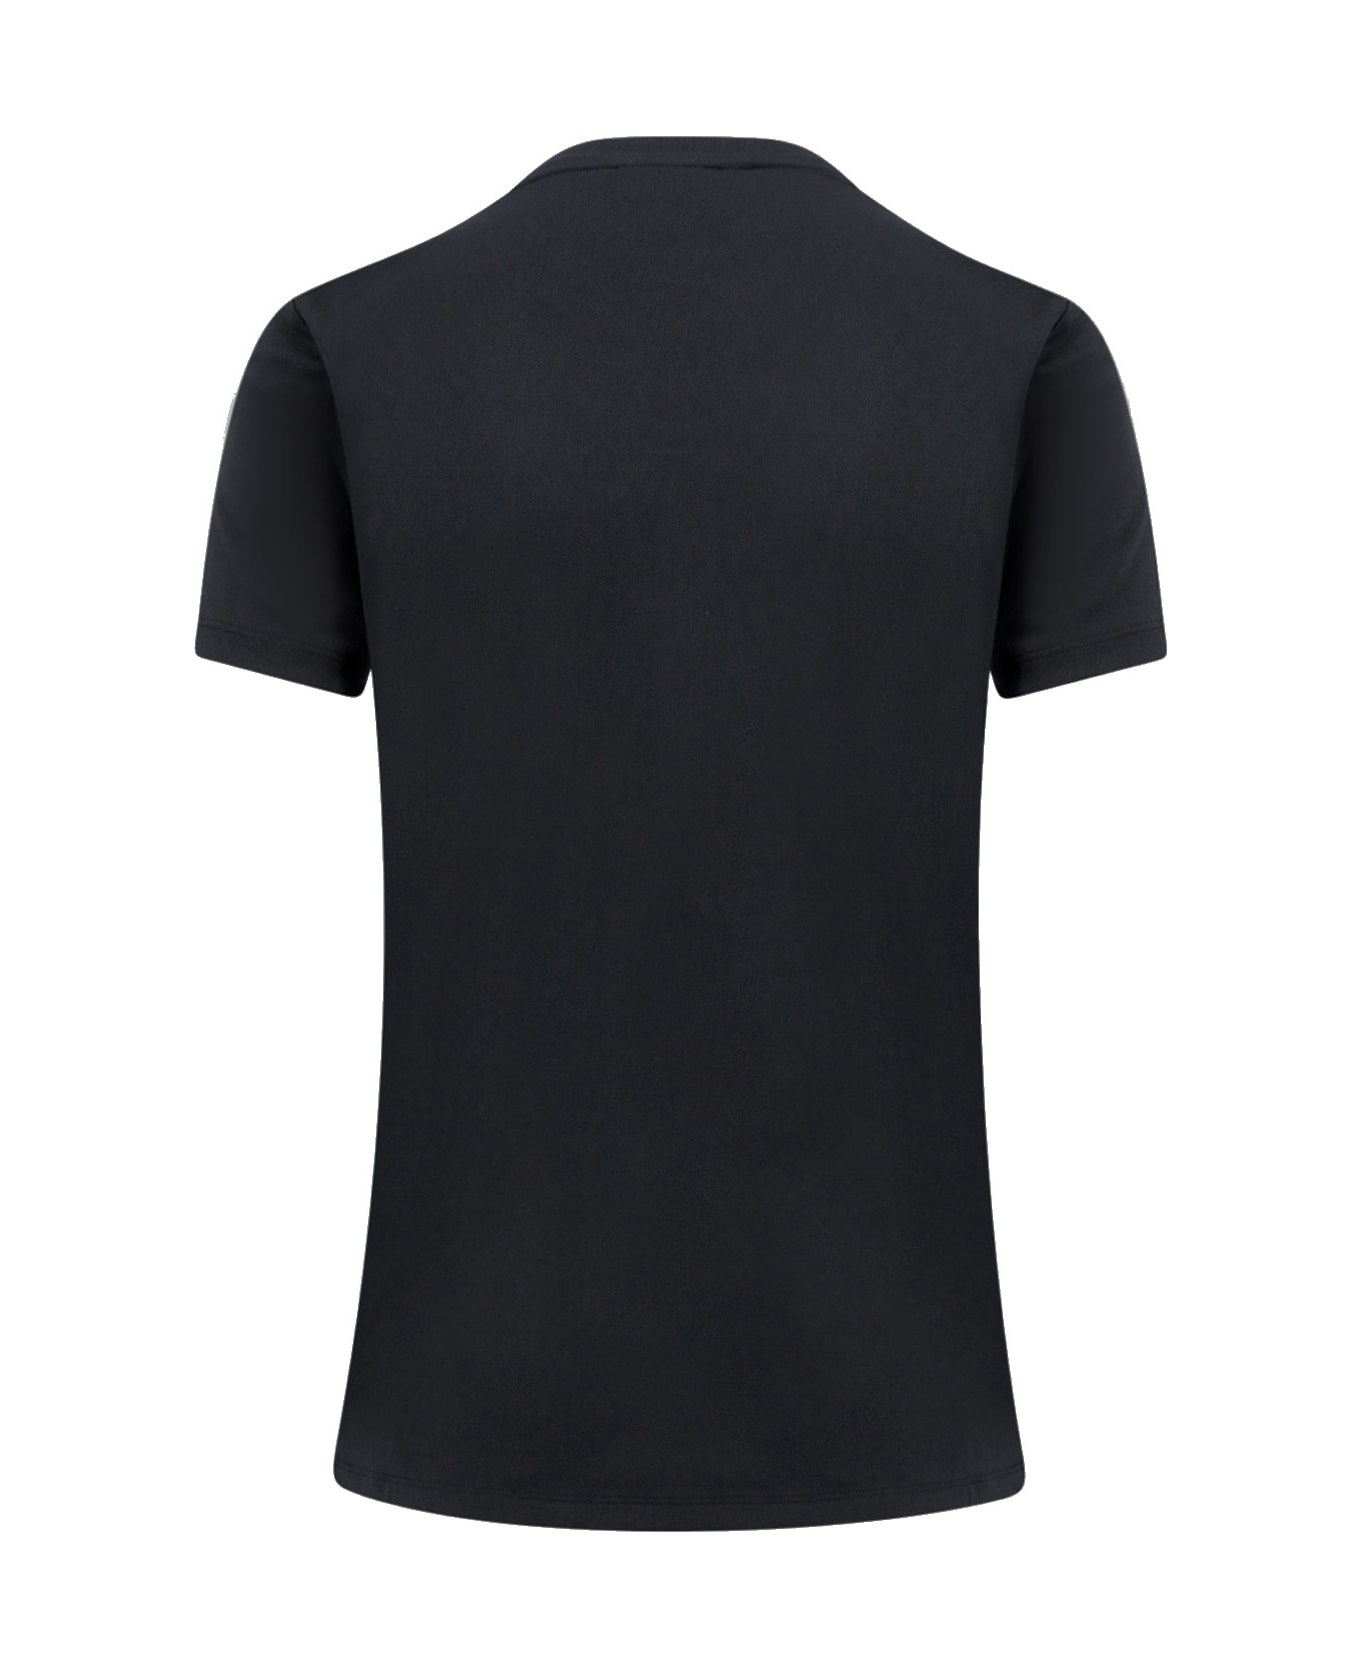 J.Lindeberg Ada T-shirt - Black